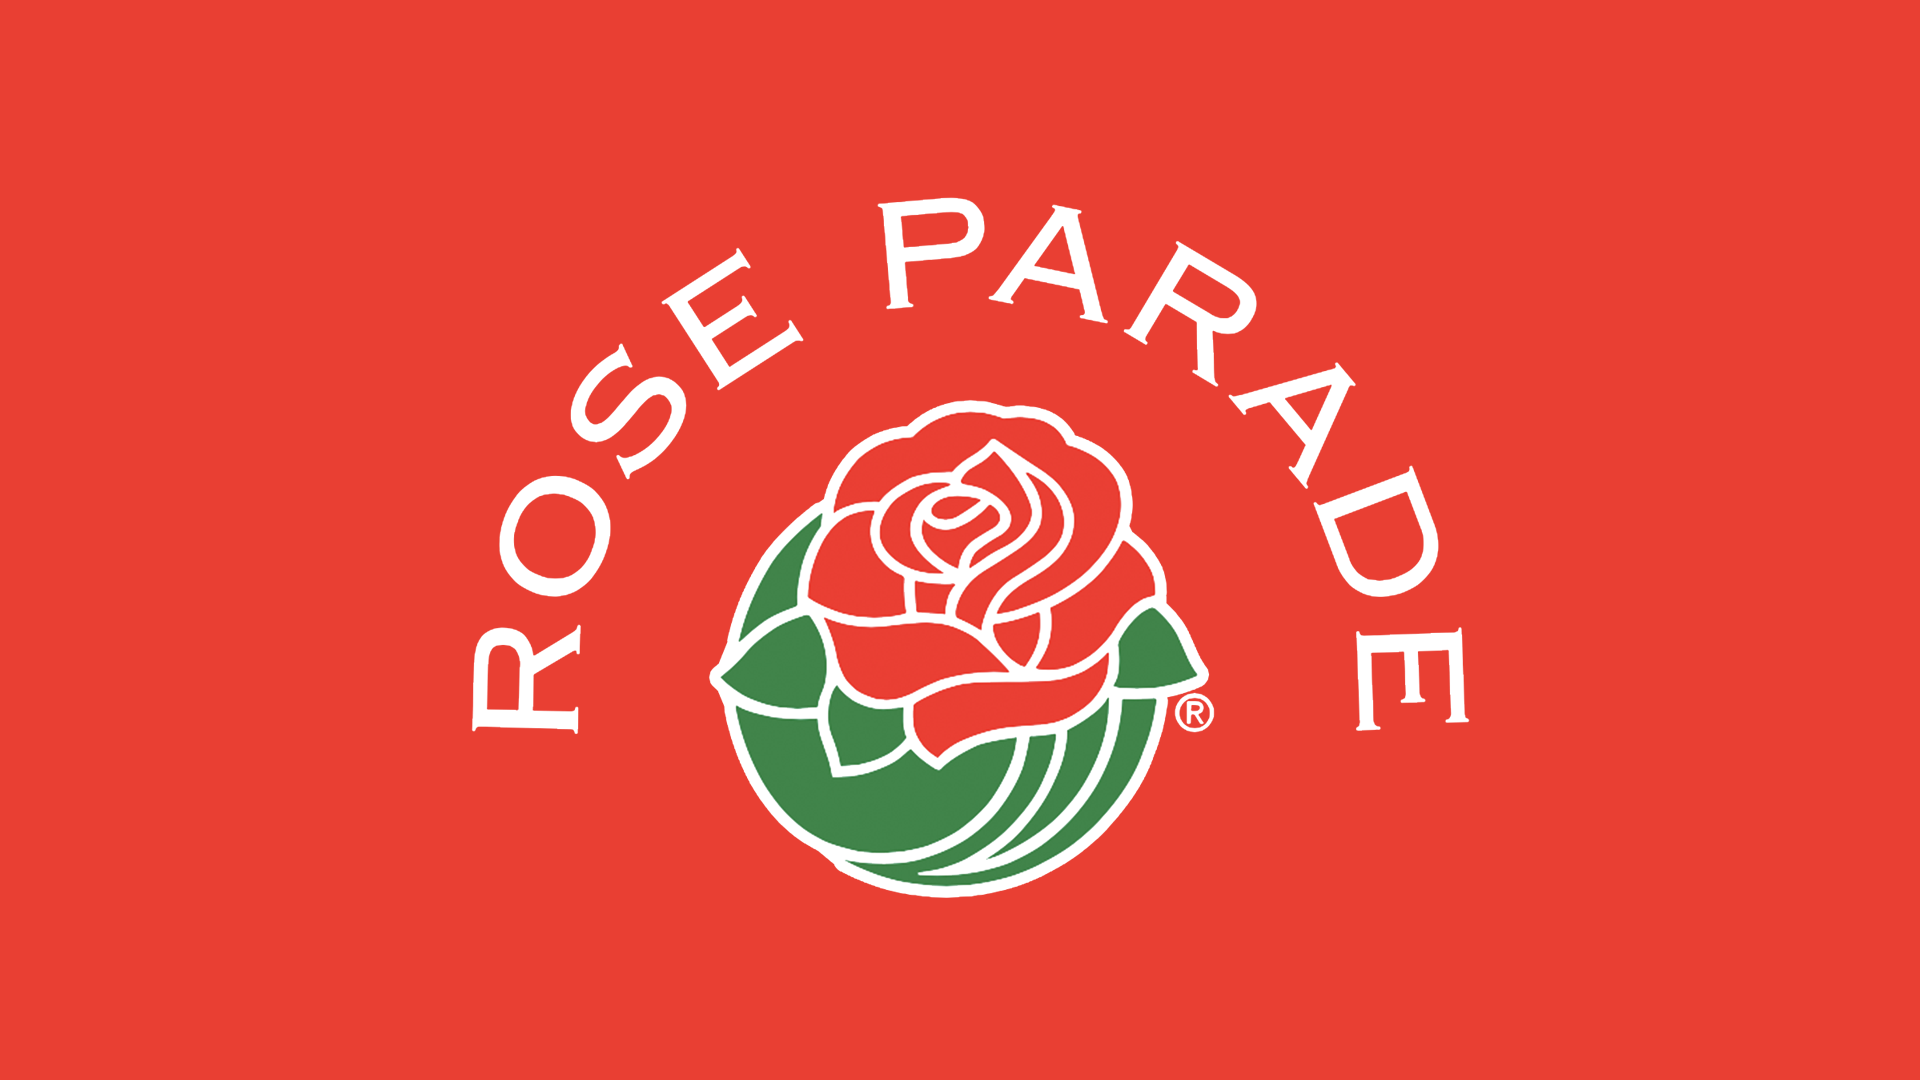 2018 Rose Parade